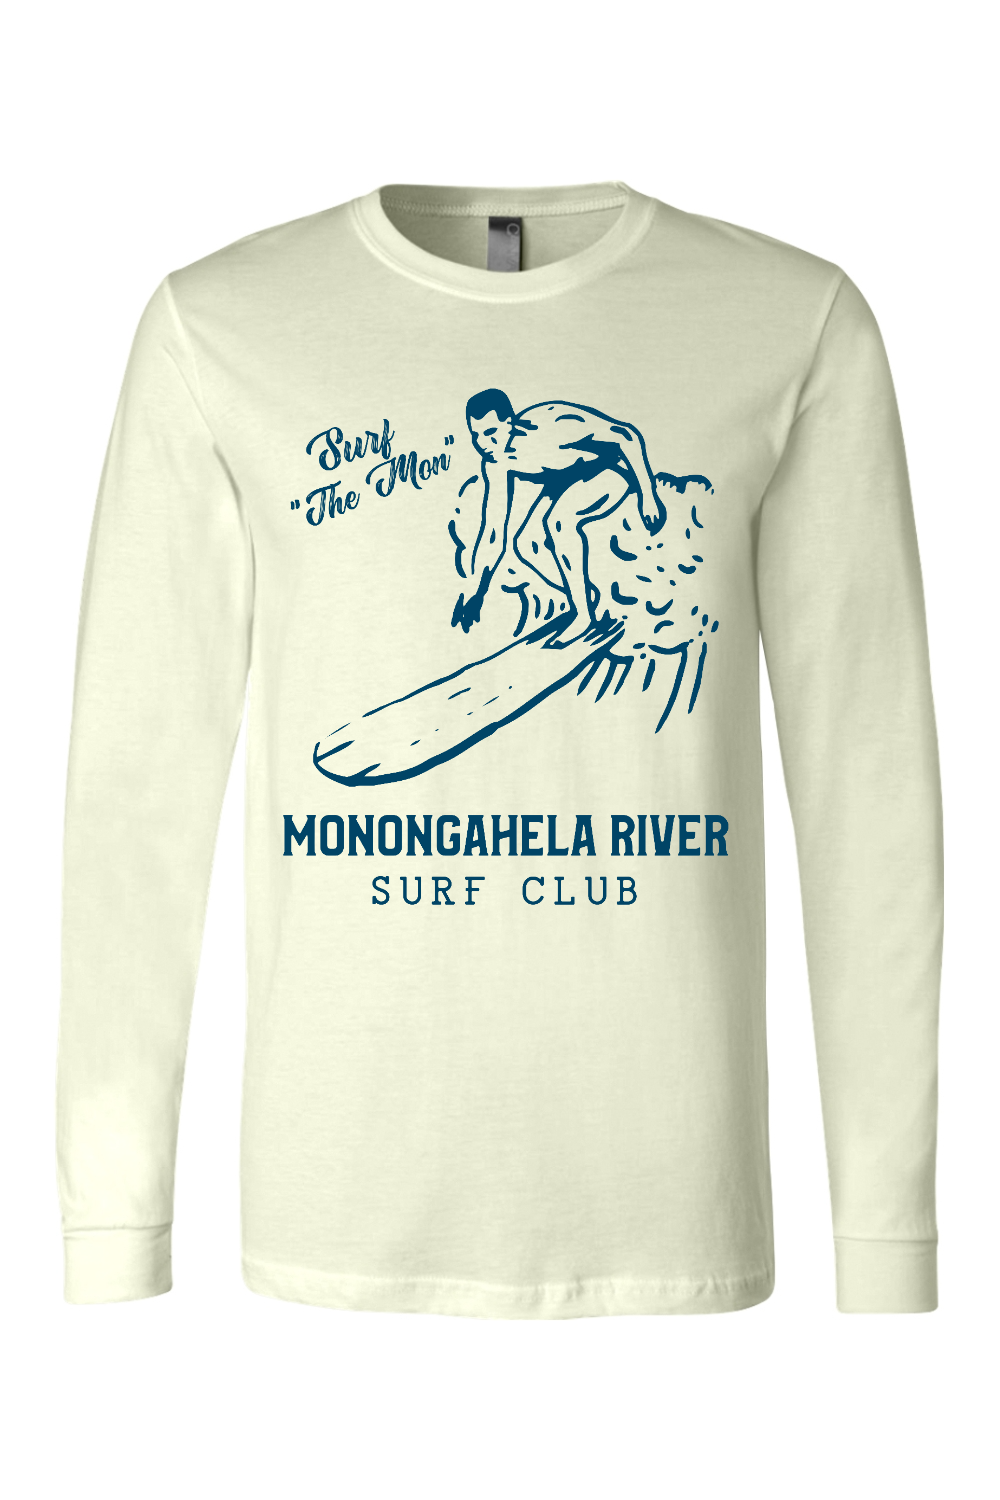 Monongahela River Surf Club - Long Sleeve Tee - Yinzylvania